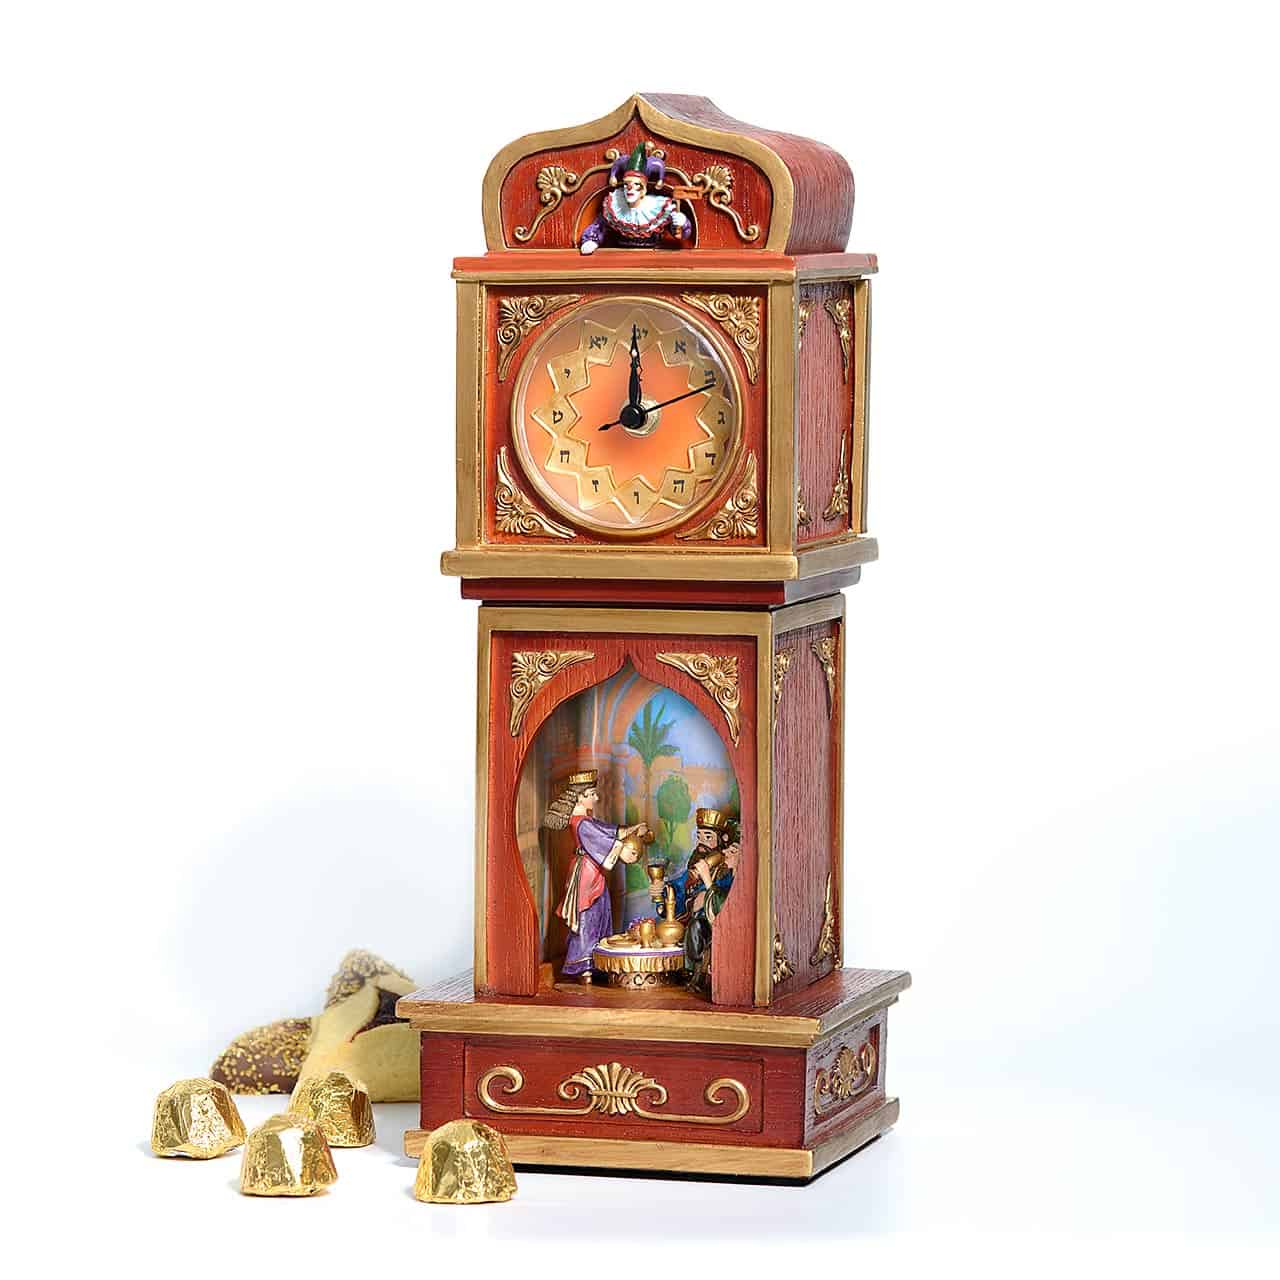 Купить игрушку часы. Grandfather Clock игрушки. Светляш игрушка часы. Часы grandfather из картона. Grandfather Clock кукольного домика.